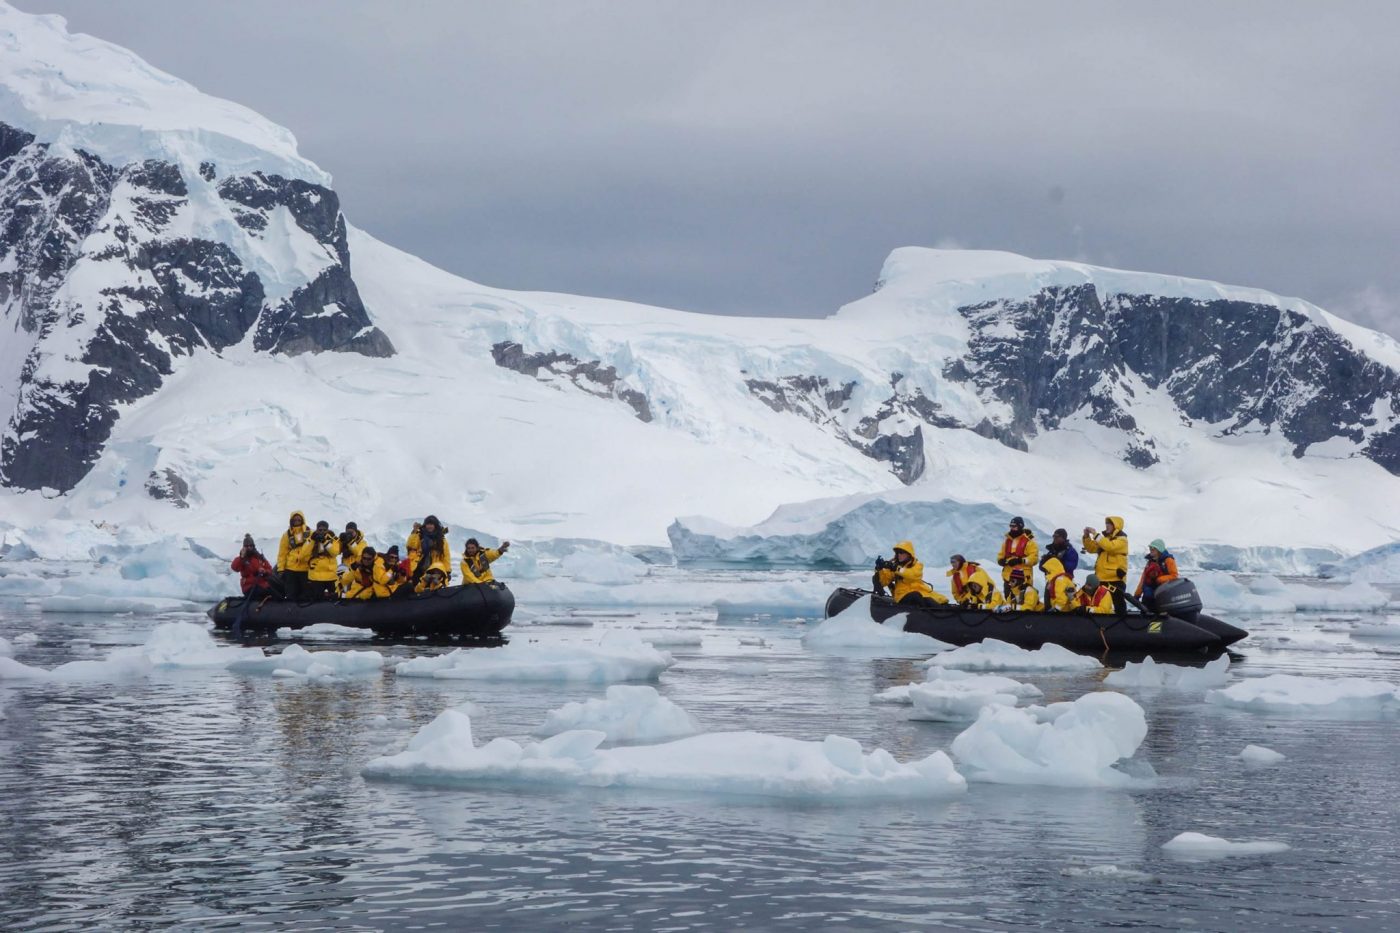 antarctique voyage prix